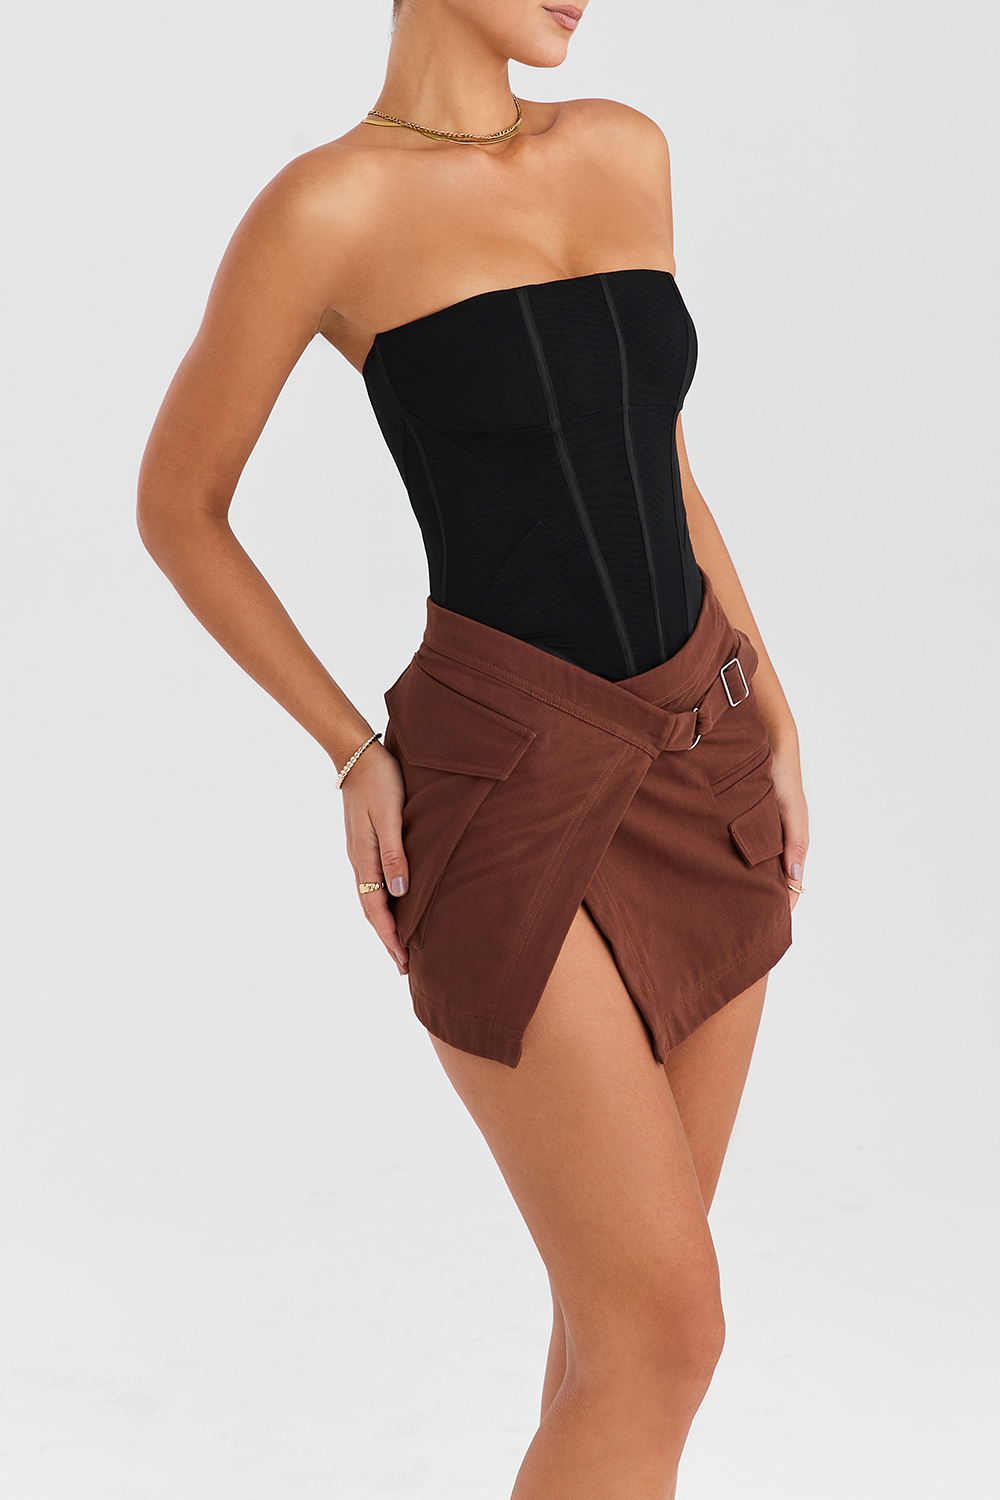 : Rocks Mistress Skirts Asymmetric Cocoa Cargo : Mini Skirt Clothing